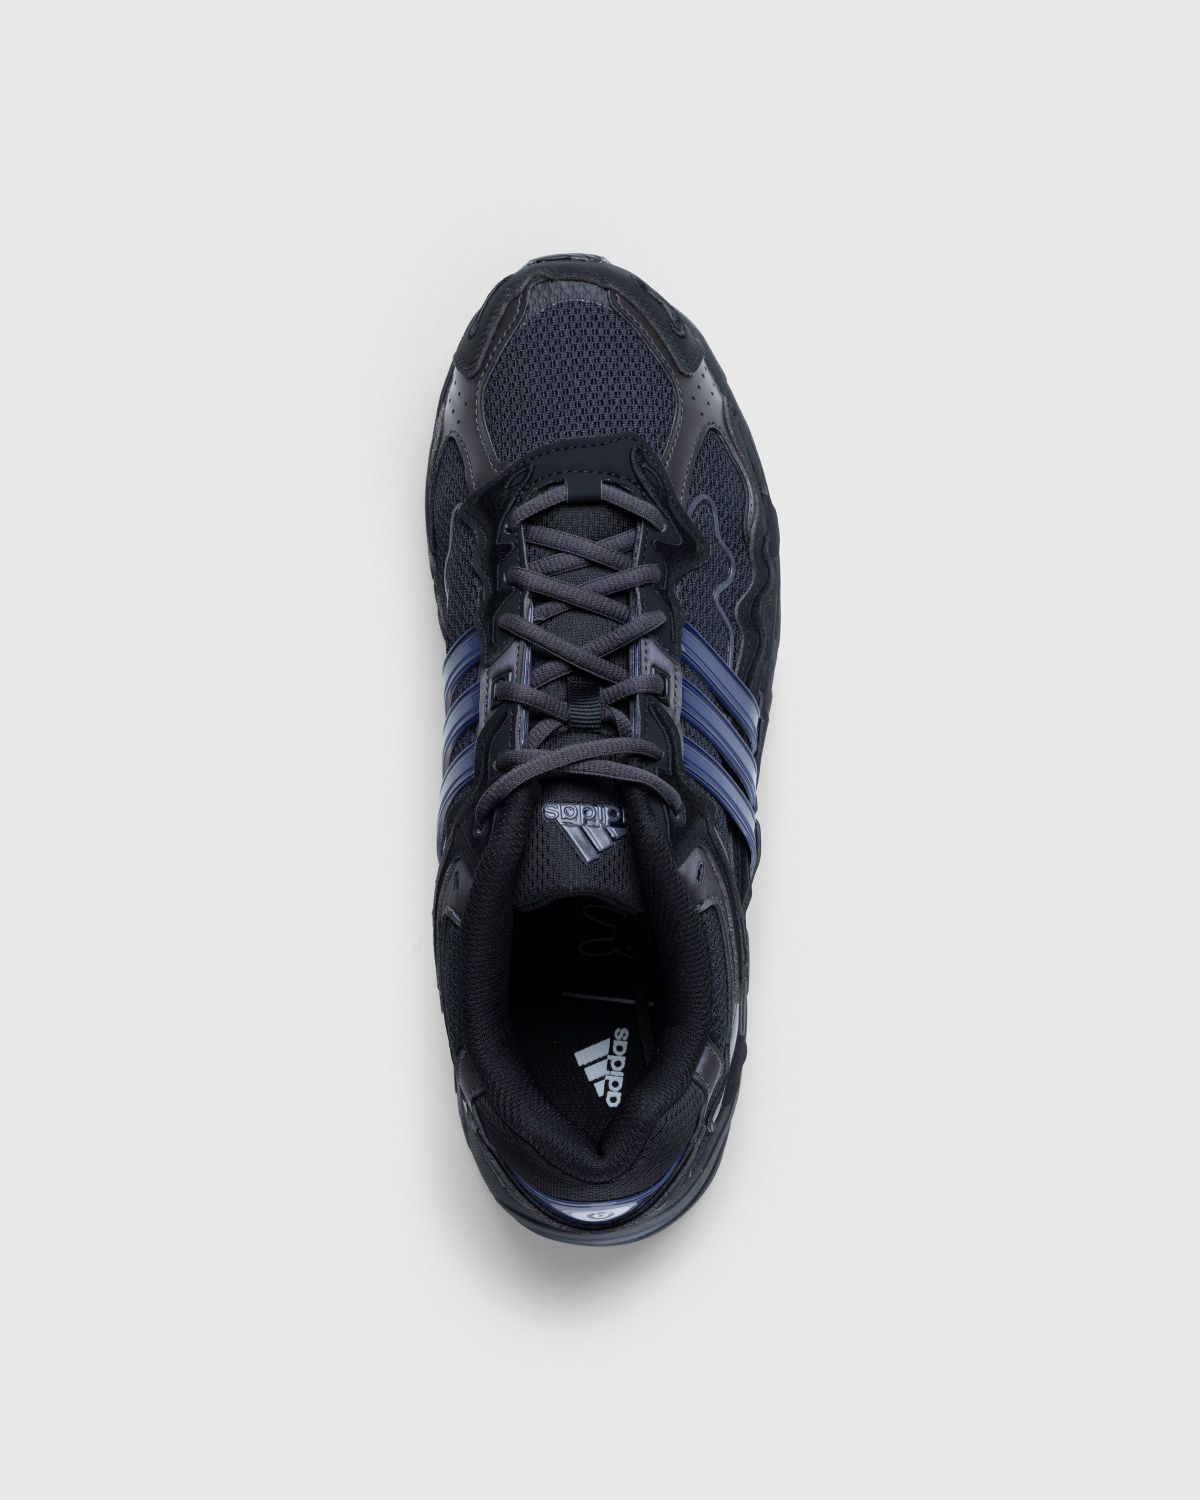 Adidas x Bad Bunny – Response Black - Sneakers - Black - Image 5